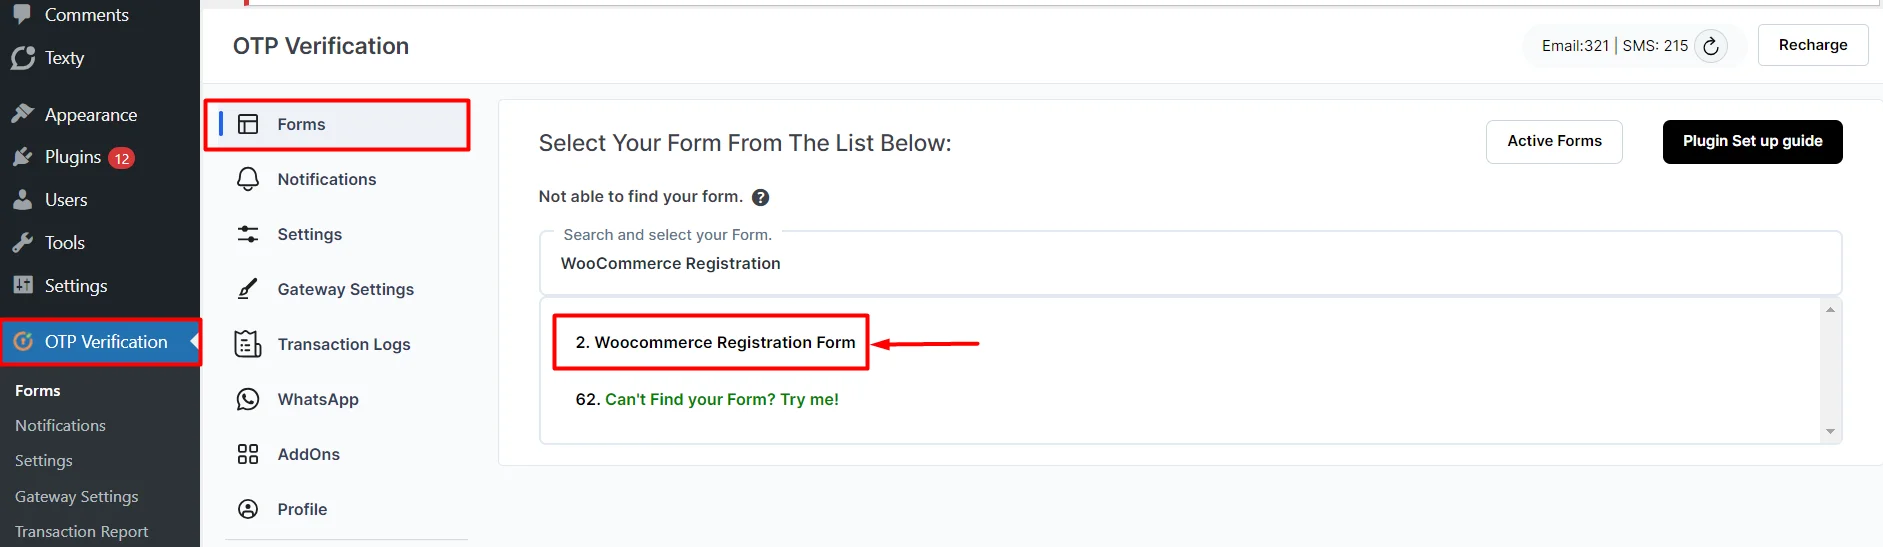 OTP Verification WooCommerce Registration Form Section